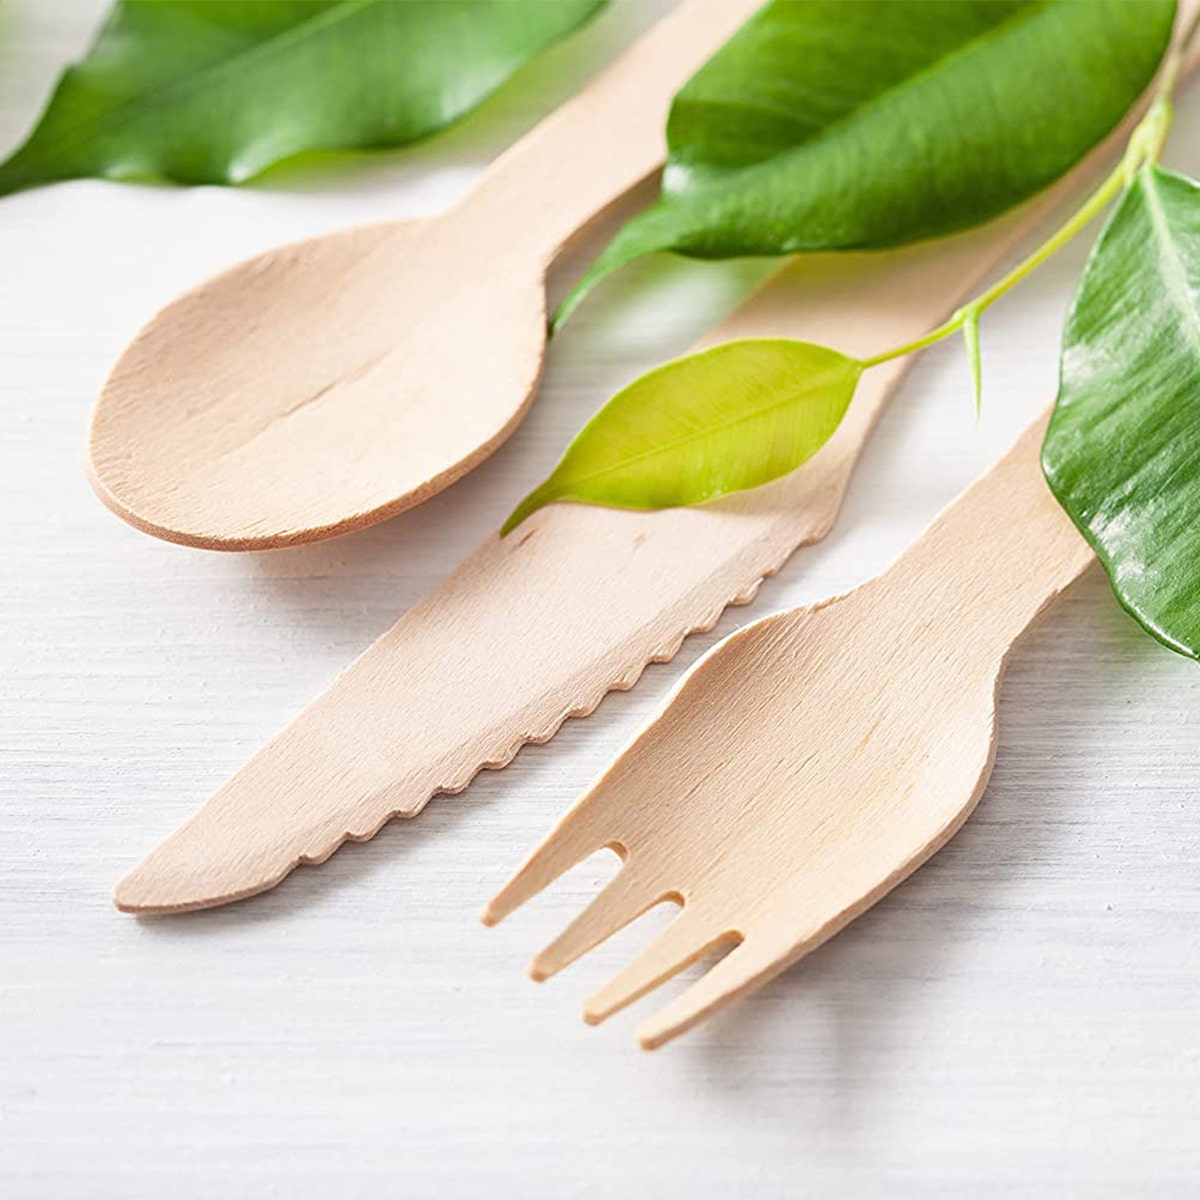 350+ Piece Rasu Wood Cutlery Set – Disposable, Biodegradable